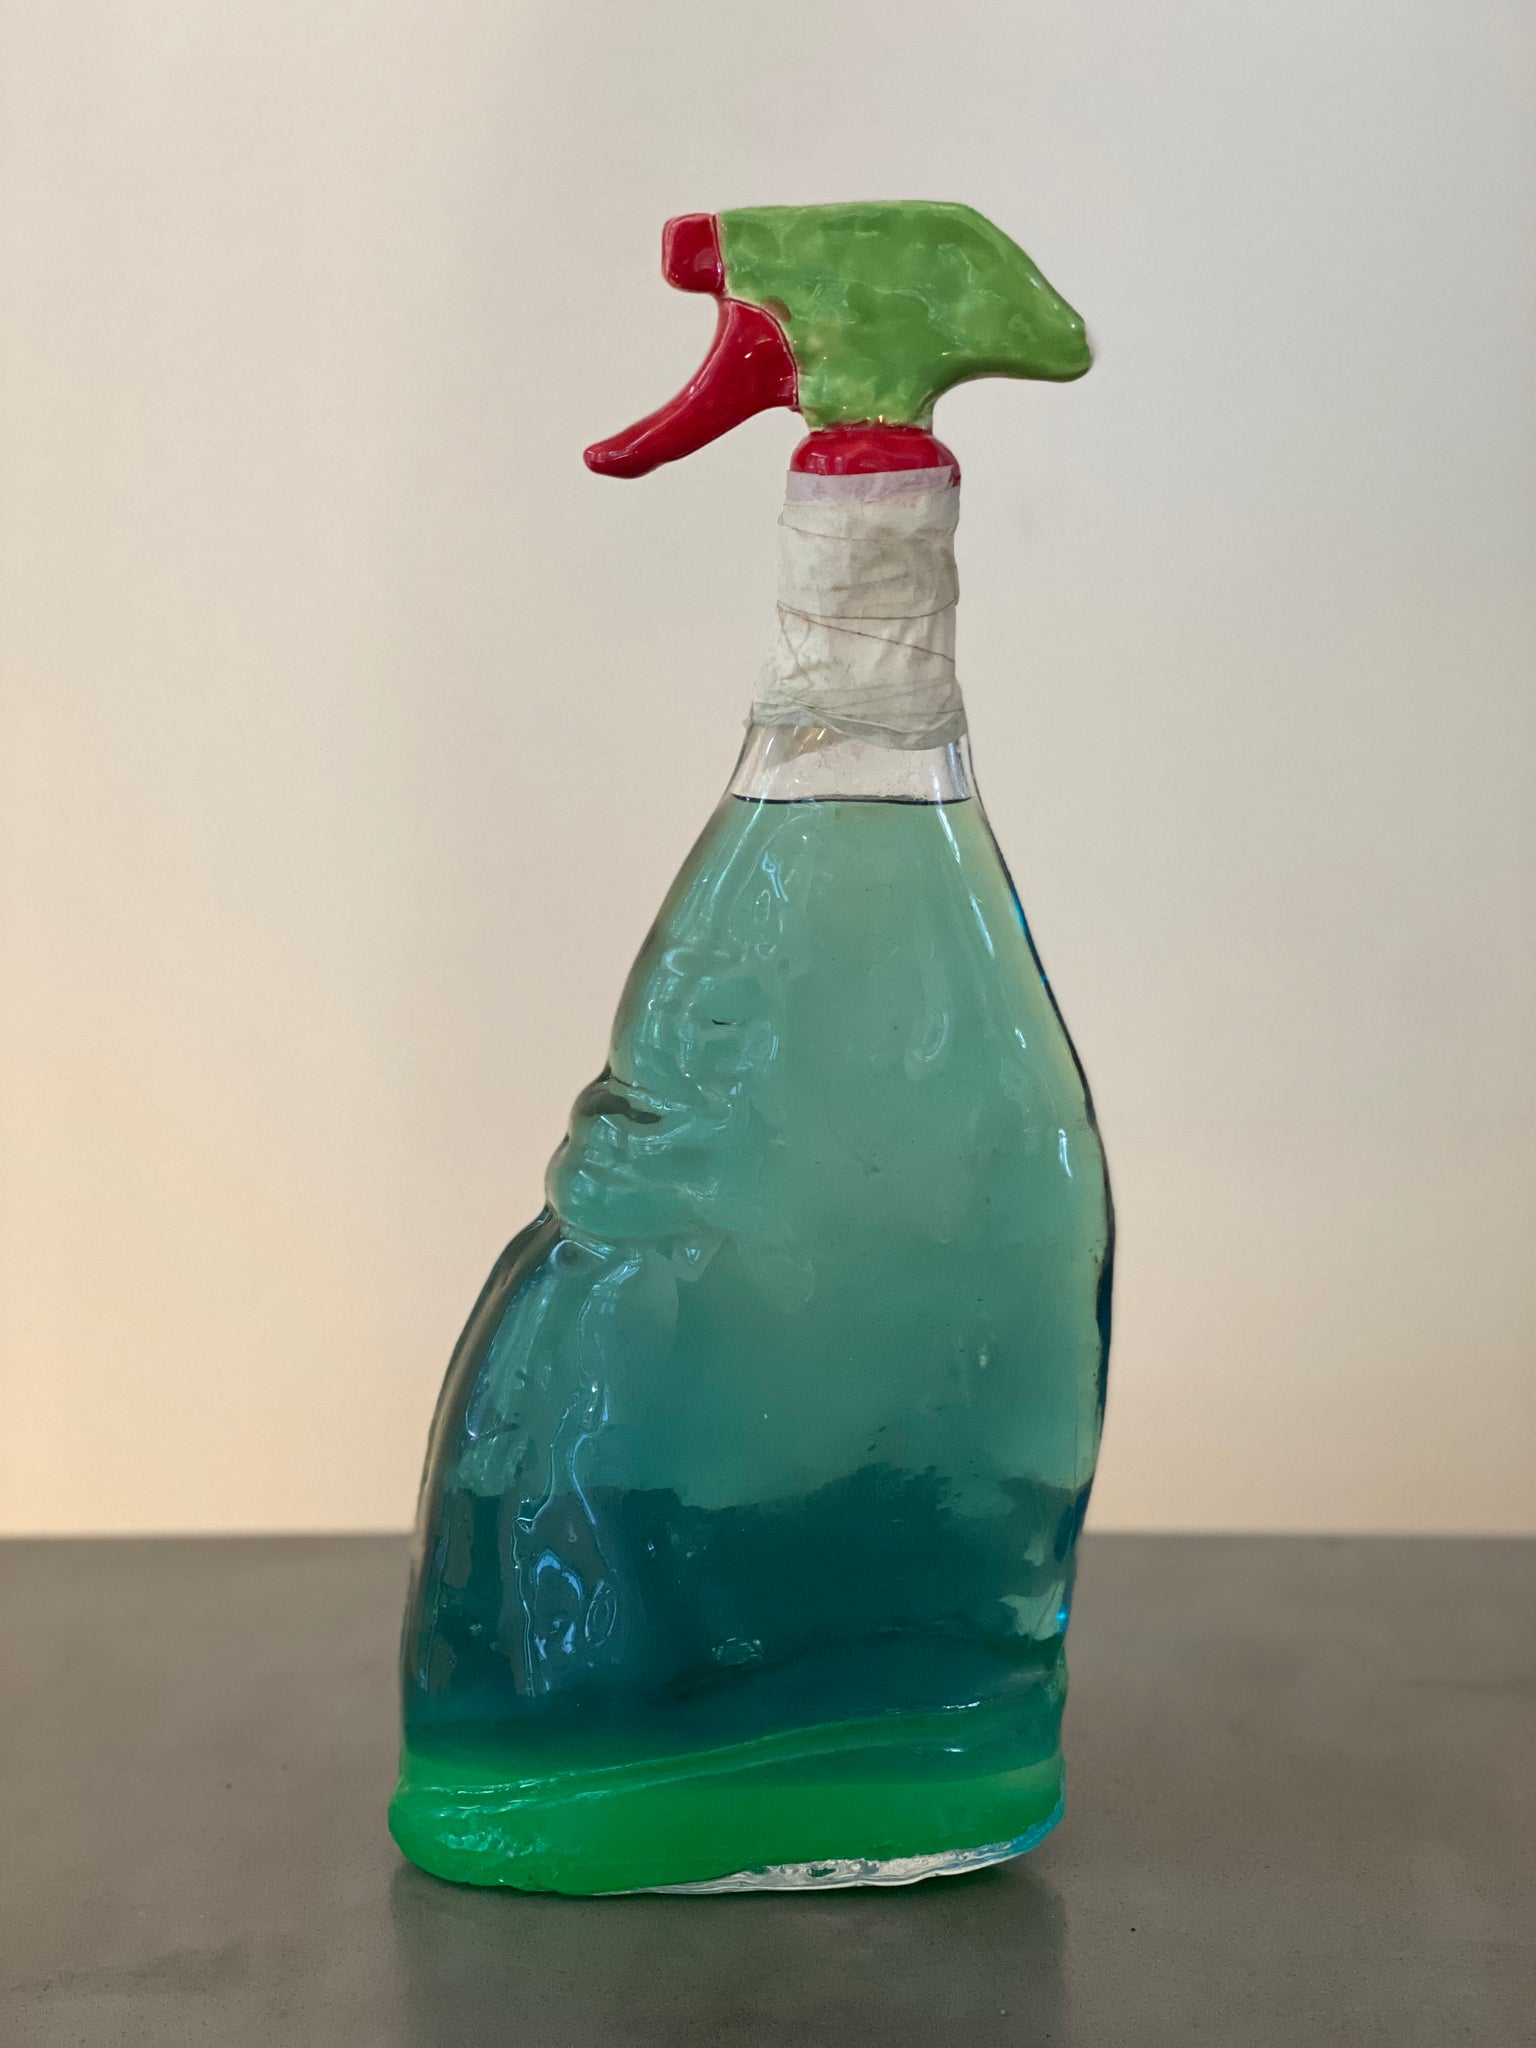 Koos Buster, "Spray Bottle (Green)" SOLD